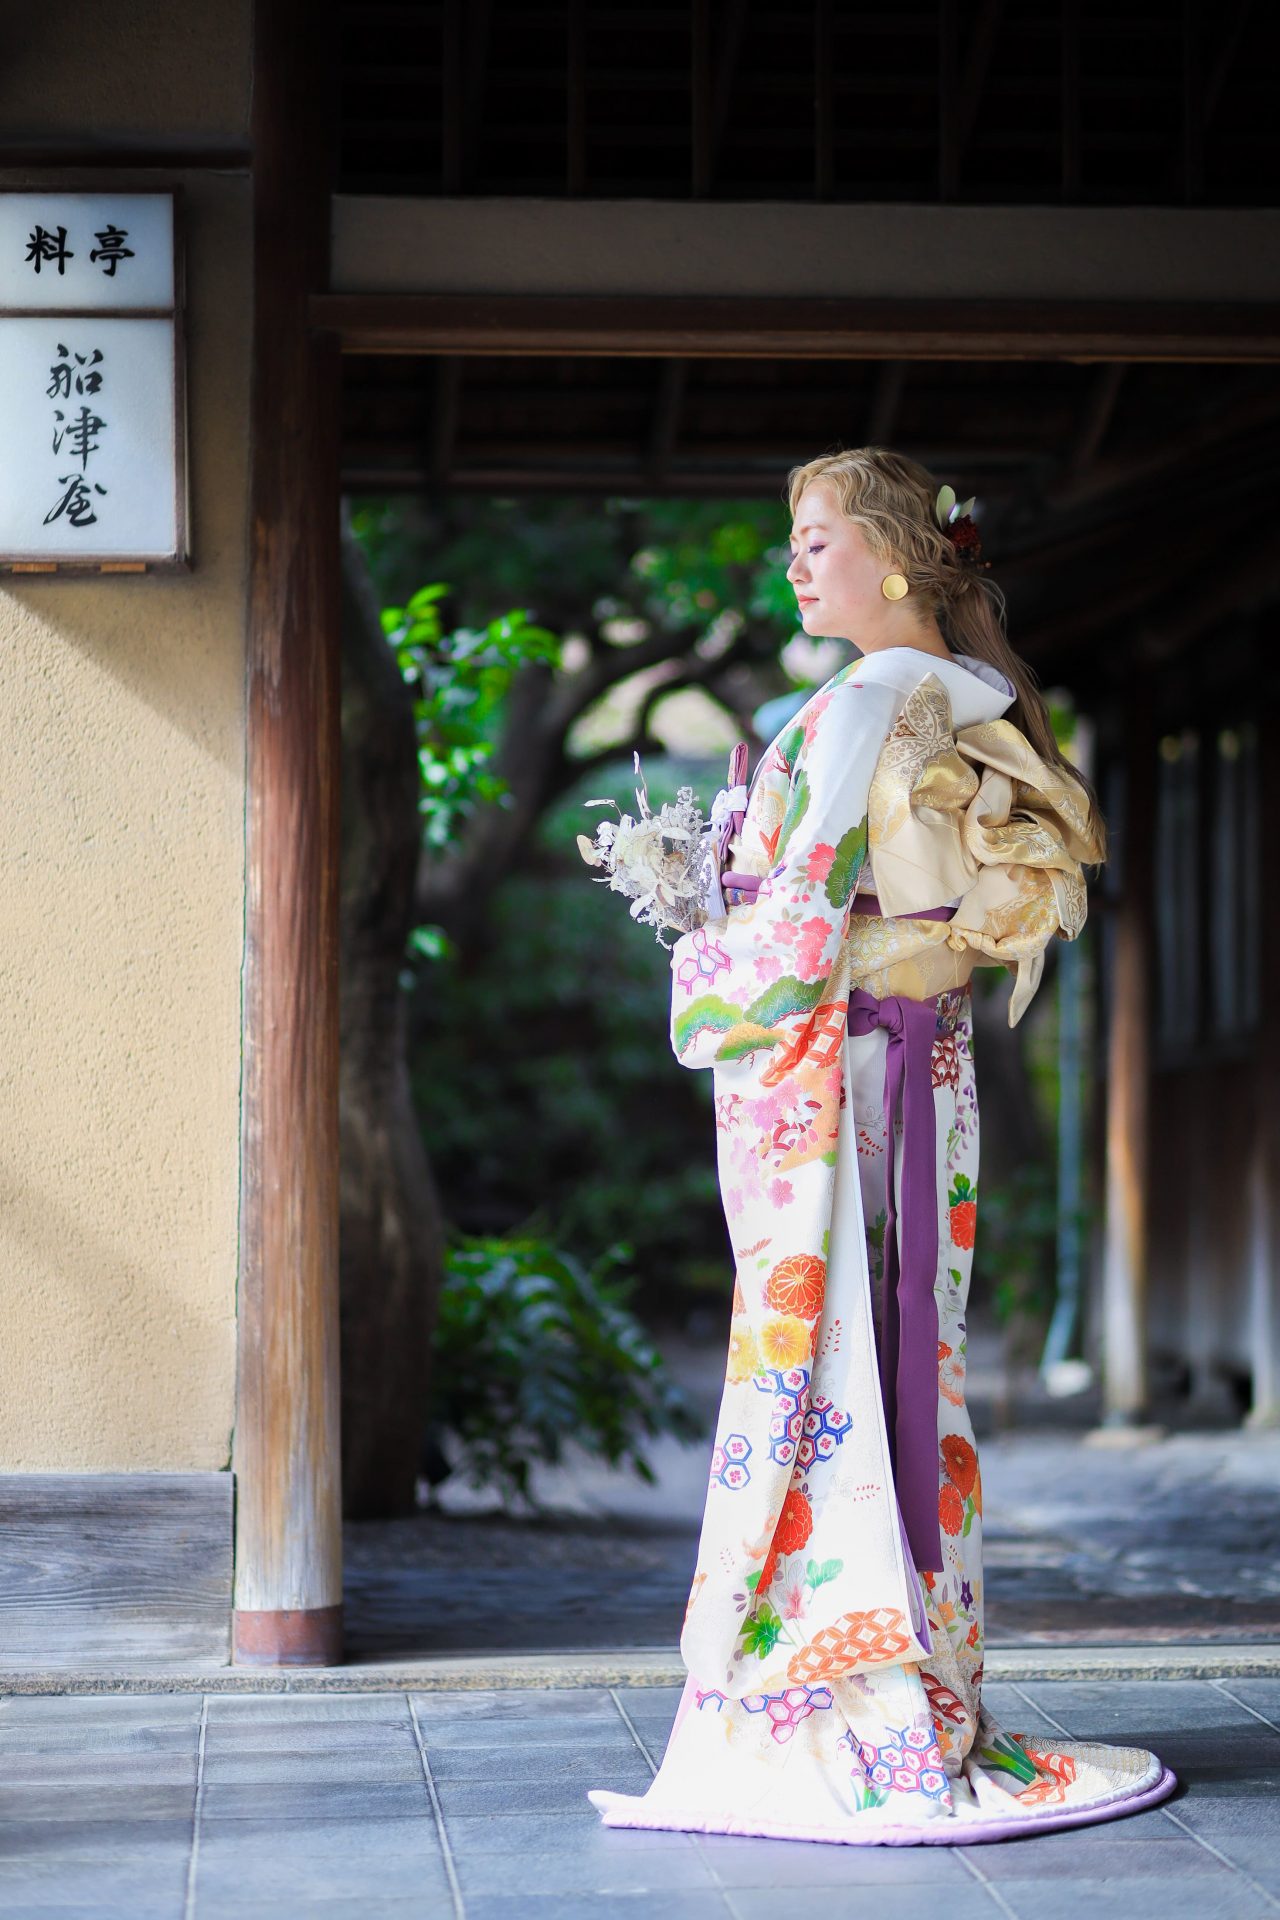 THE FUNATSUYAにてお式や前撮りをされる花嫁様におすすめの白地の本振袖